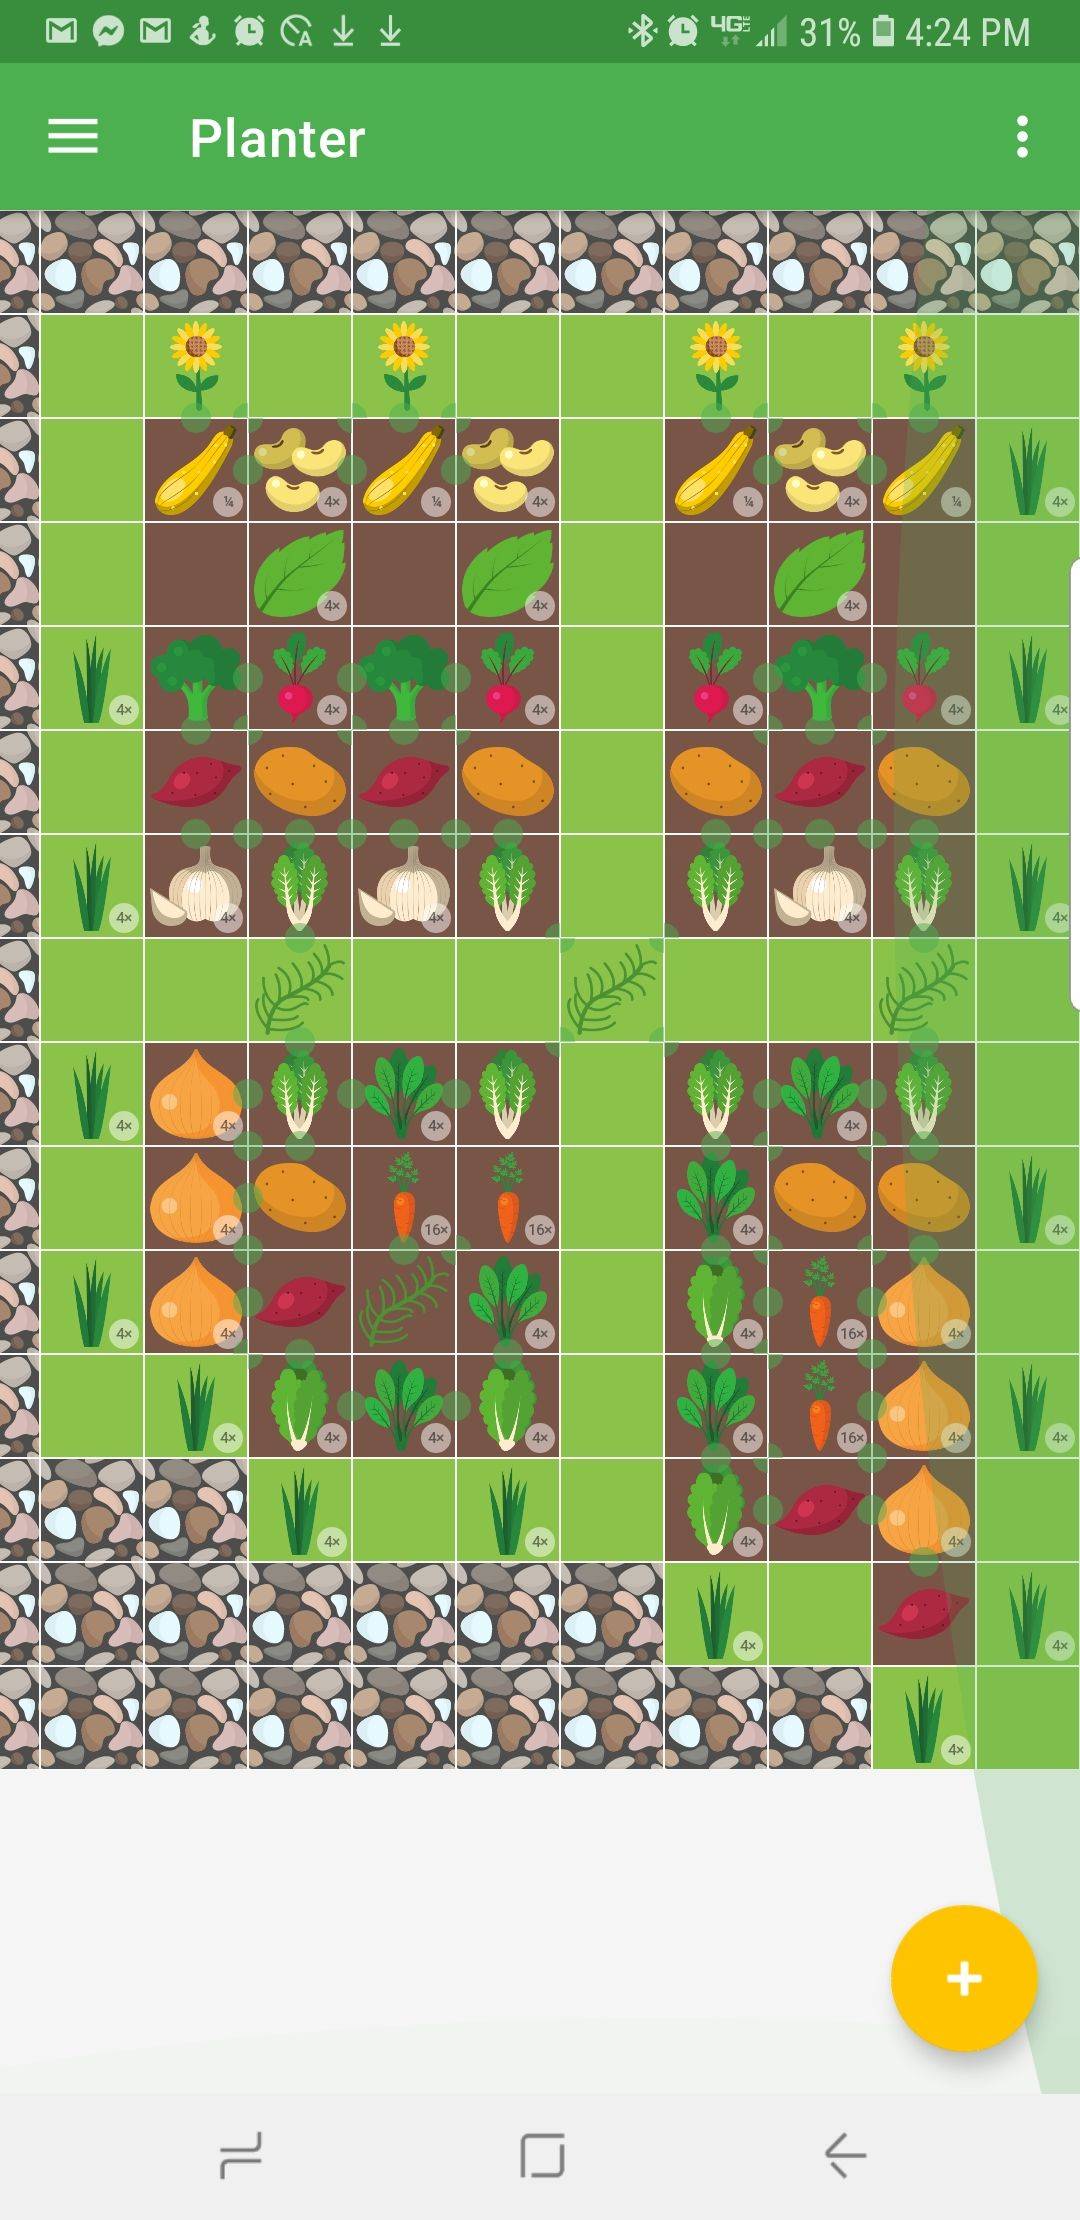 Square Foot Gardening Planting Chart